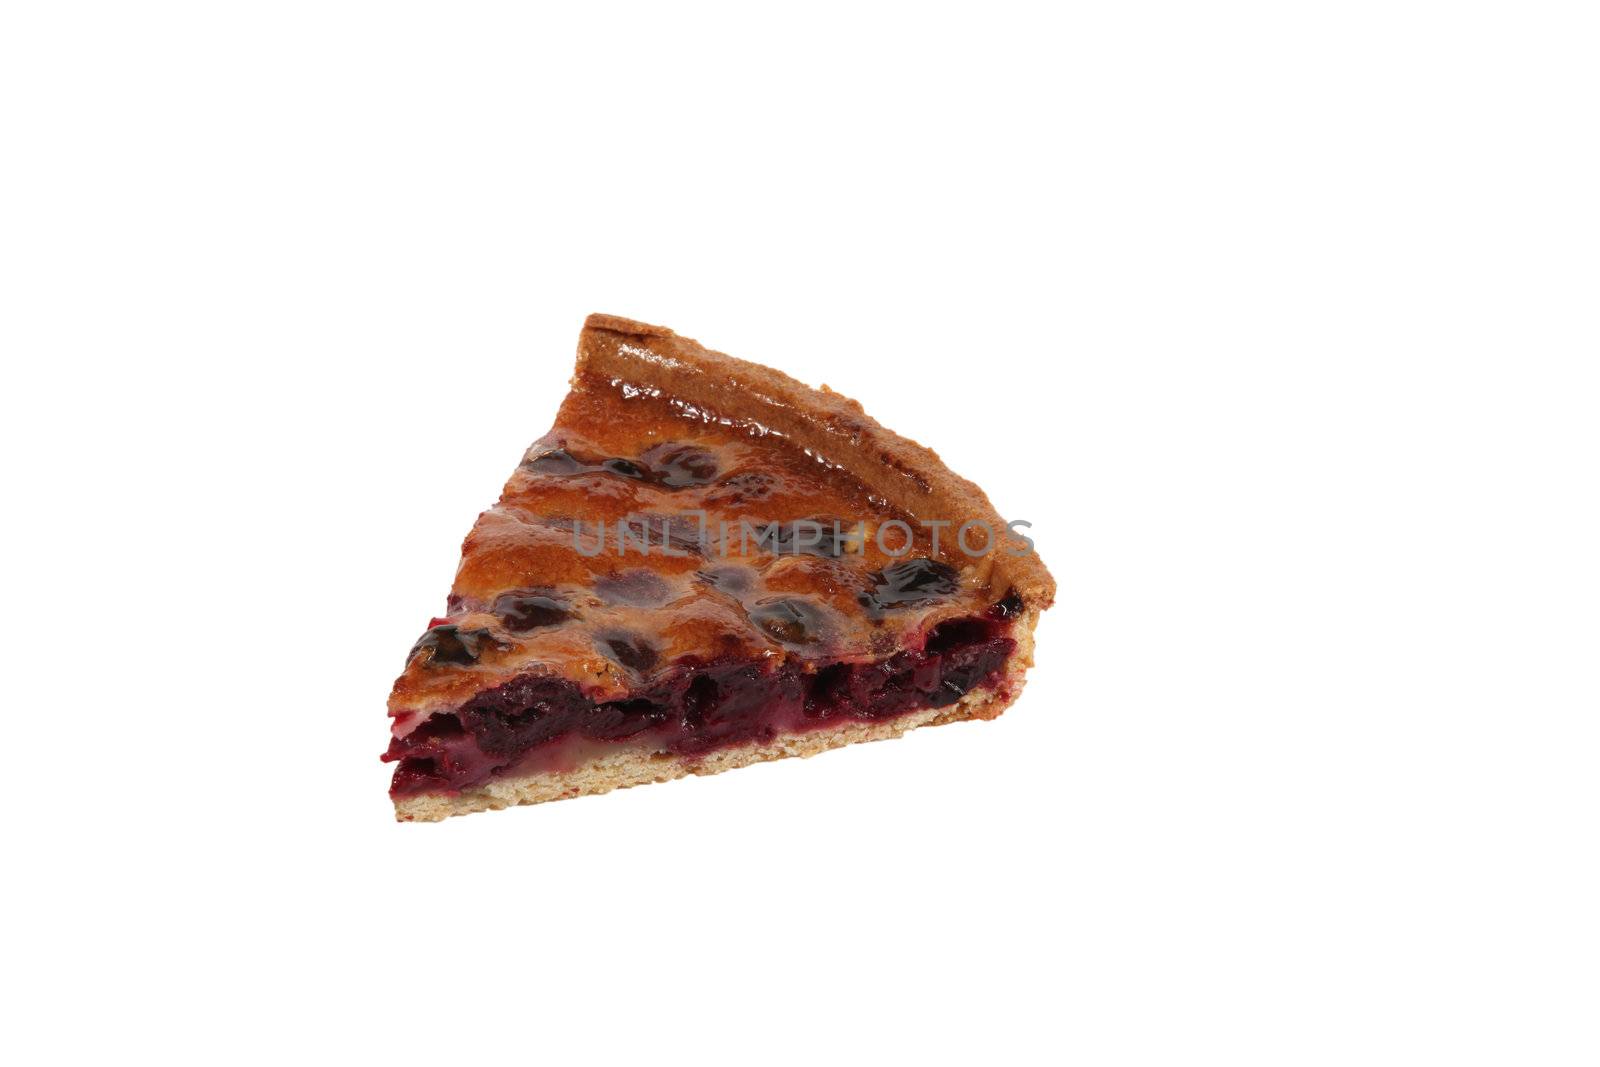 Slice of fruit pie